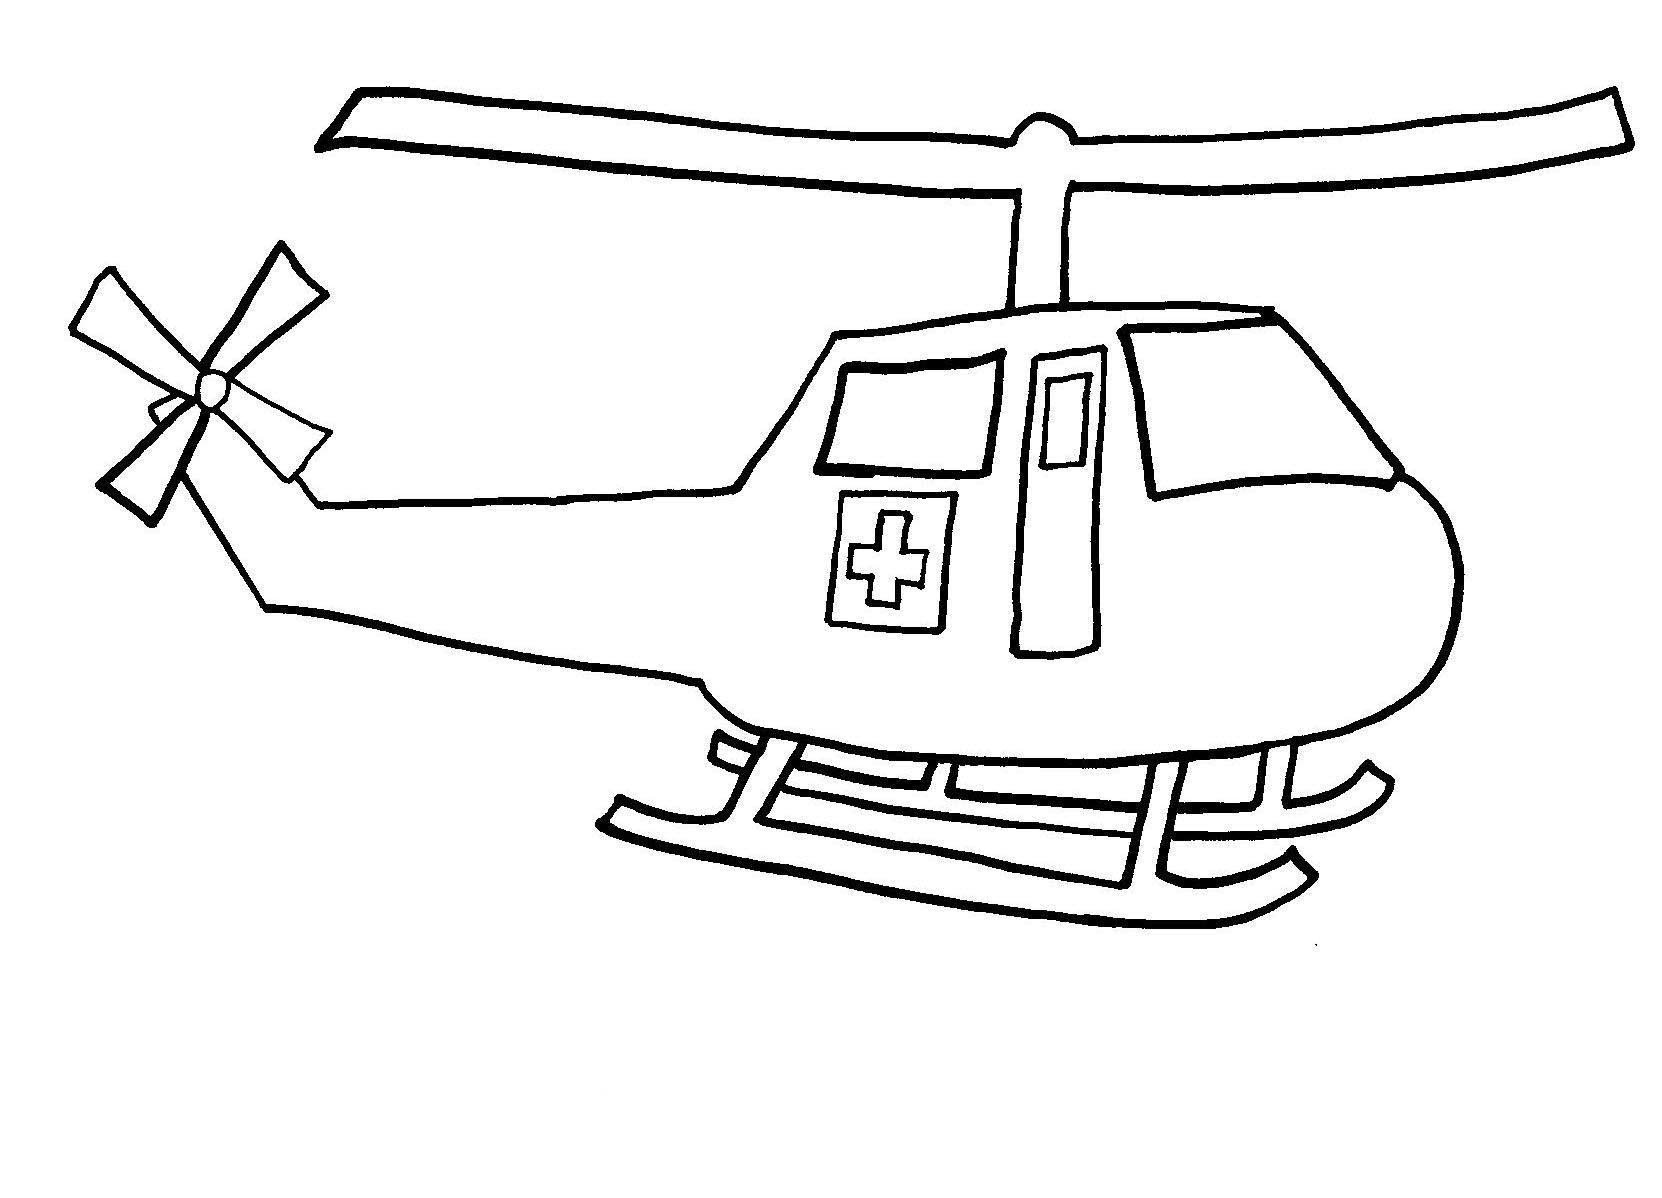 dibujos de helicopteros para imprimir